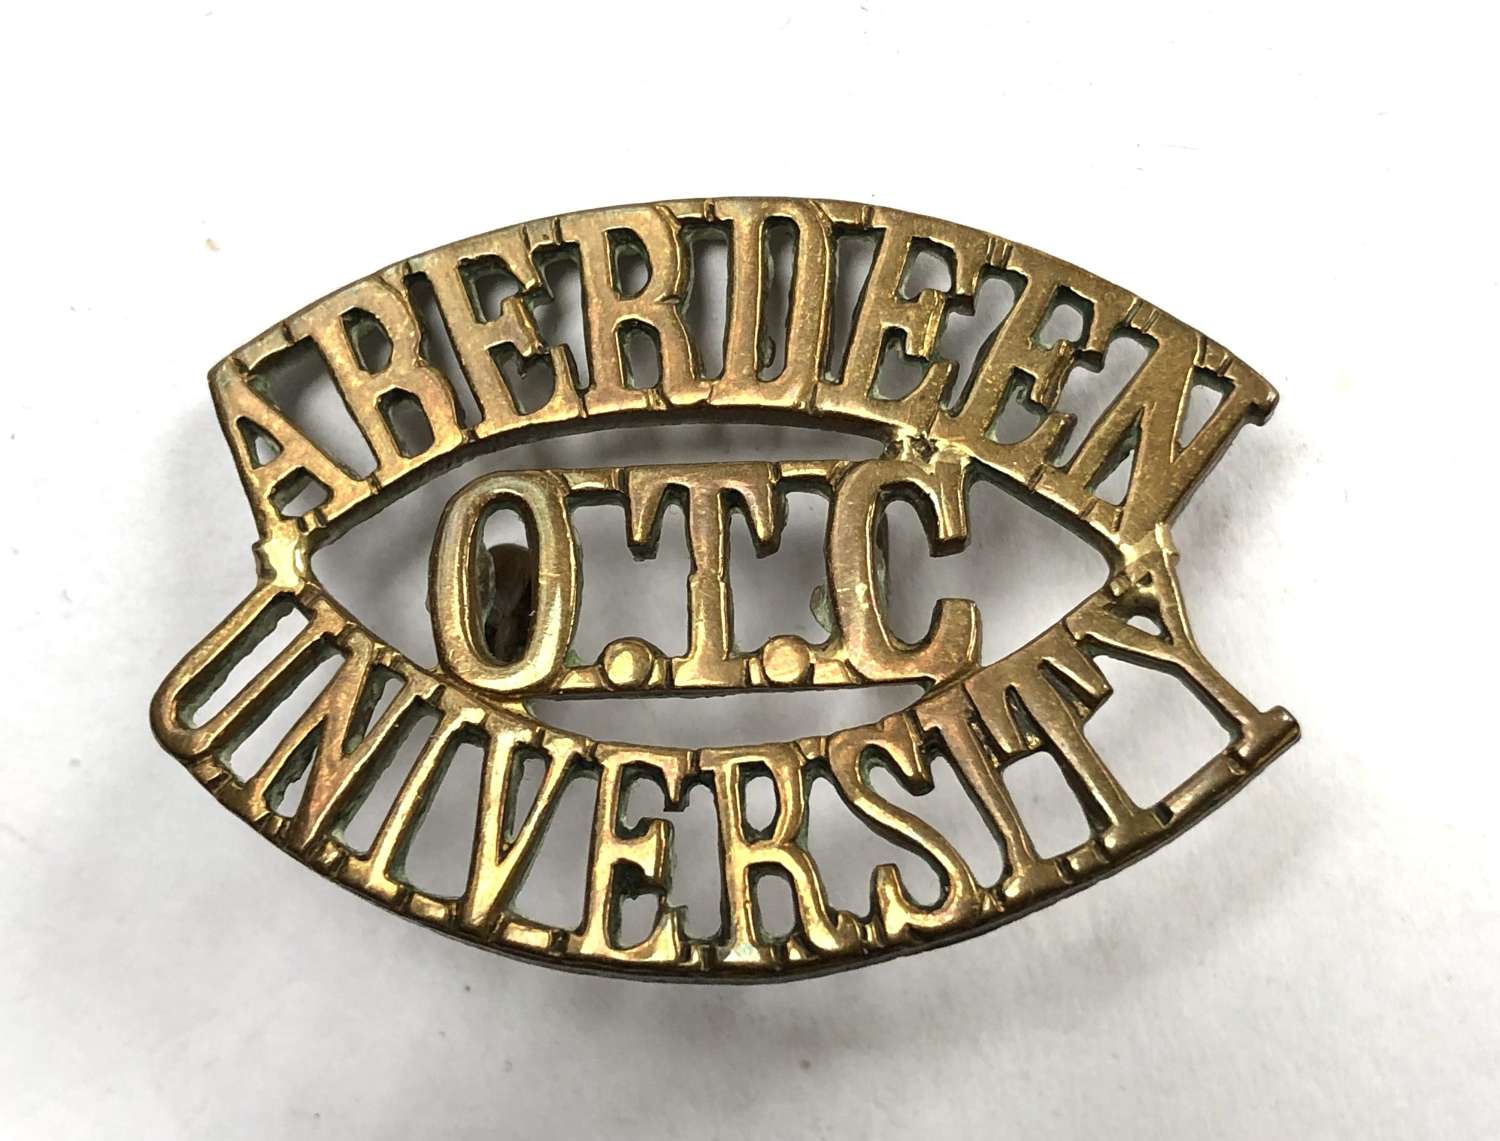 ABERDEEN / OTC / UNIVERSITY shoulder title